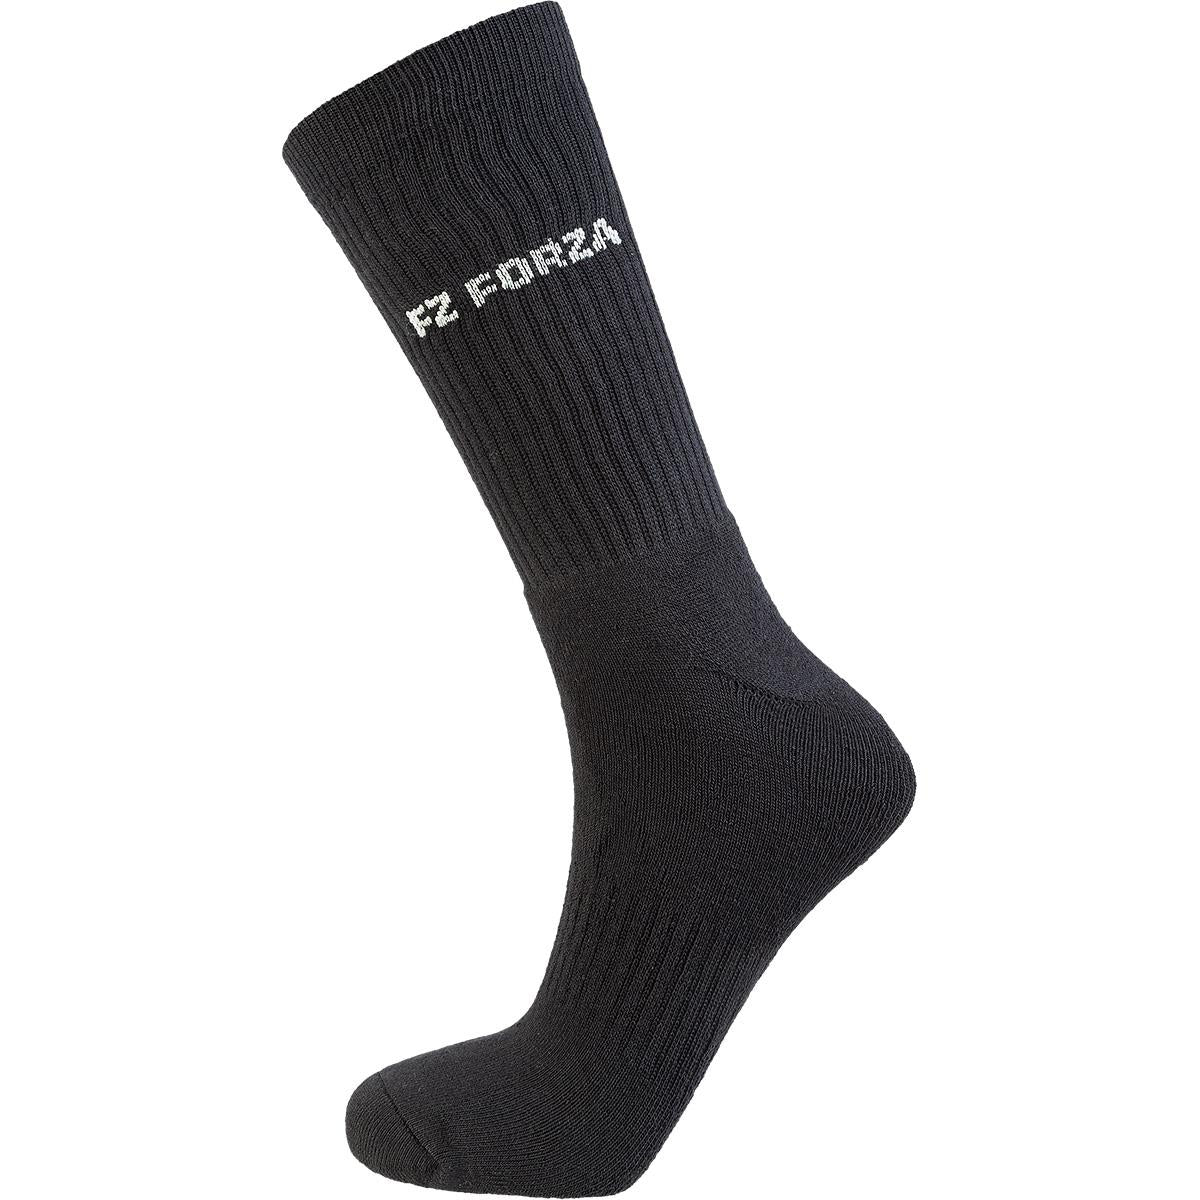 FZ Forza Classic Long Badminton Socks - 3 Pack - Black